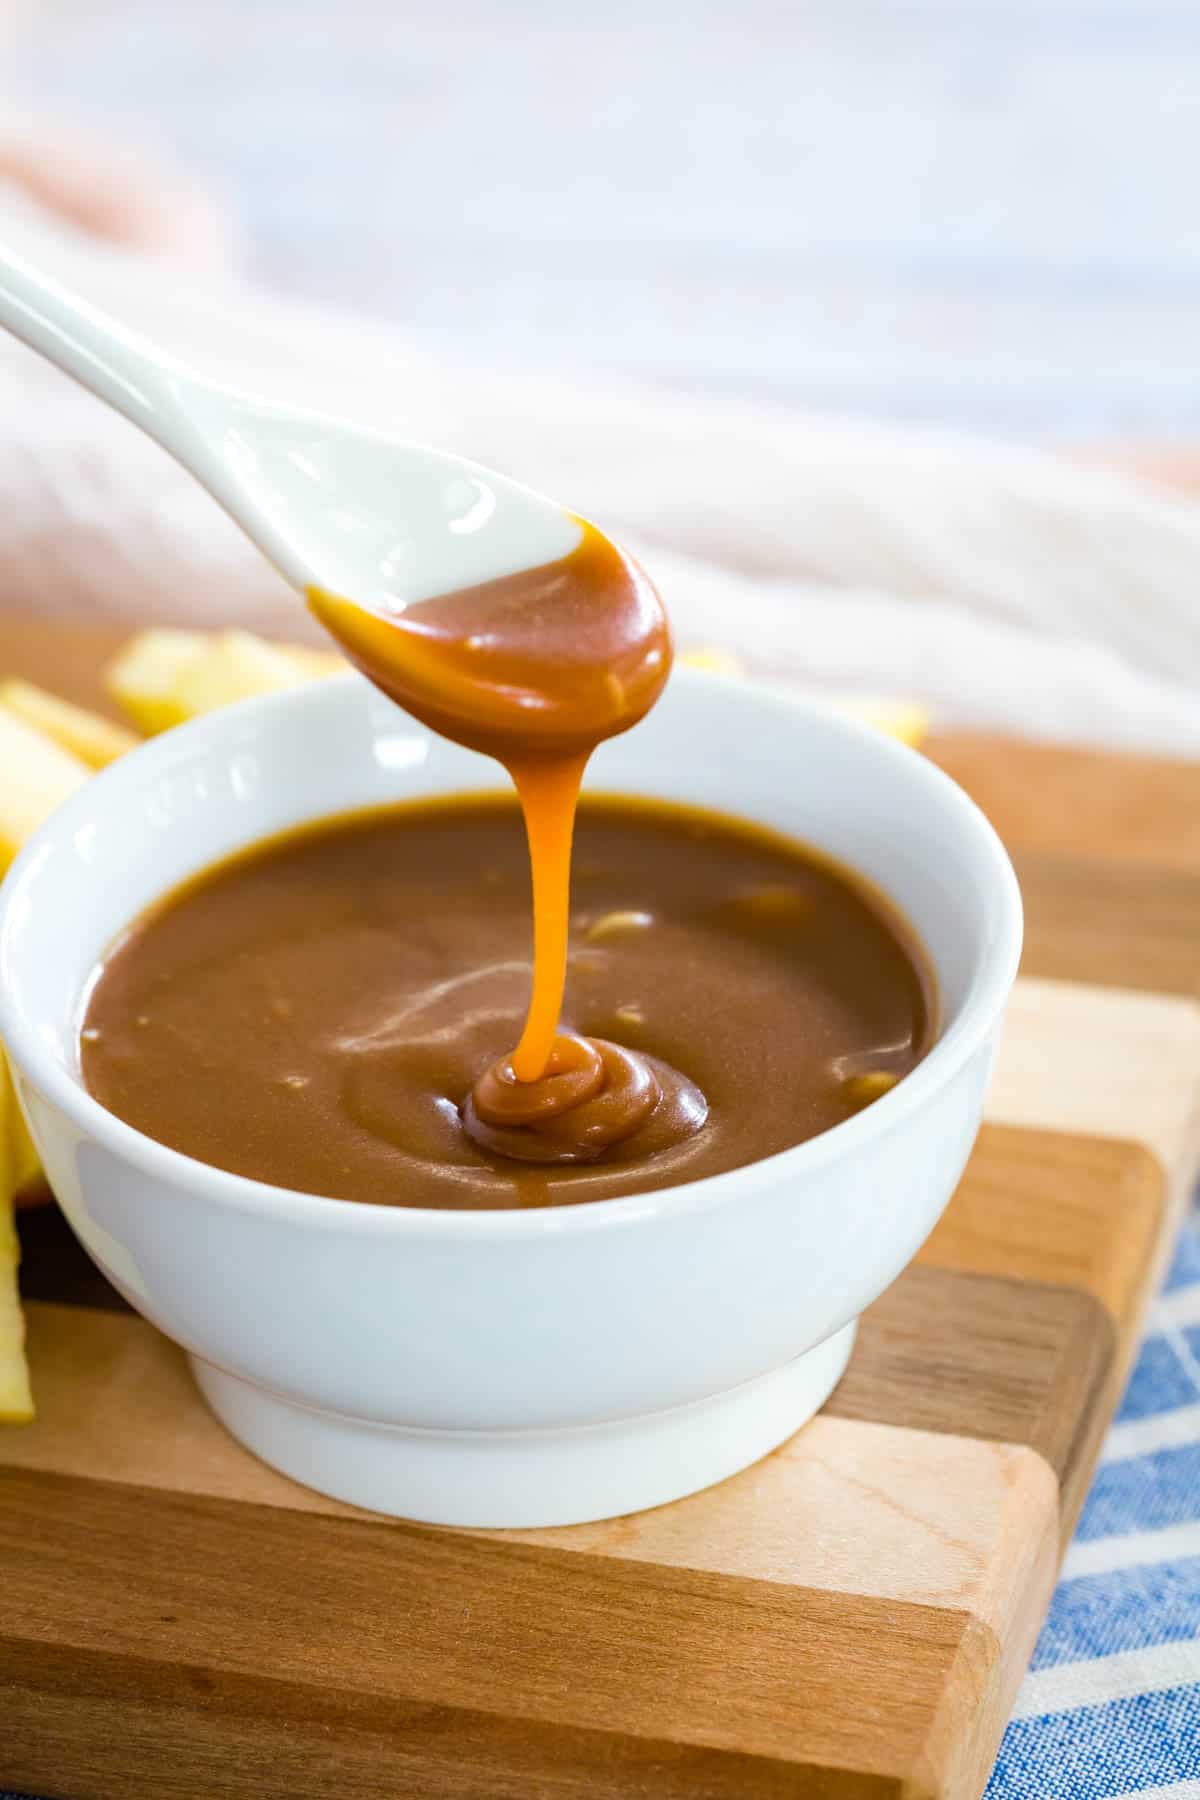 A spoon dips into a bowl of caramel sauce.